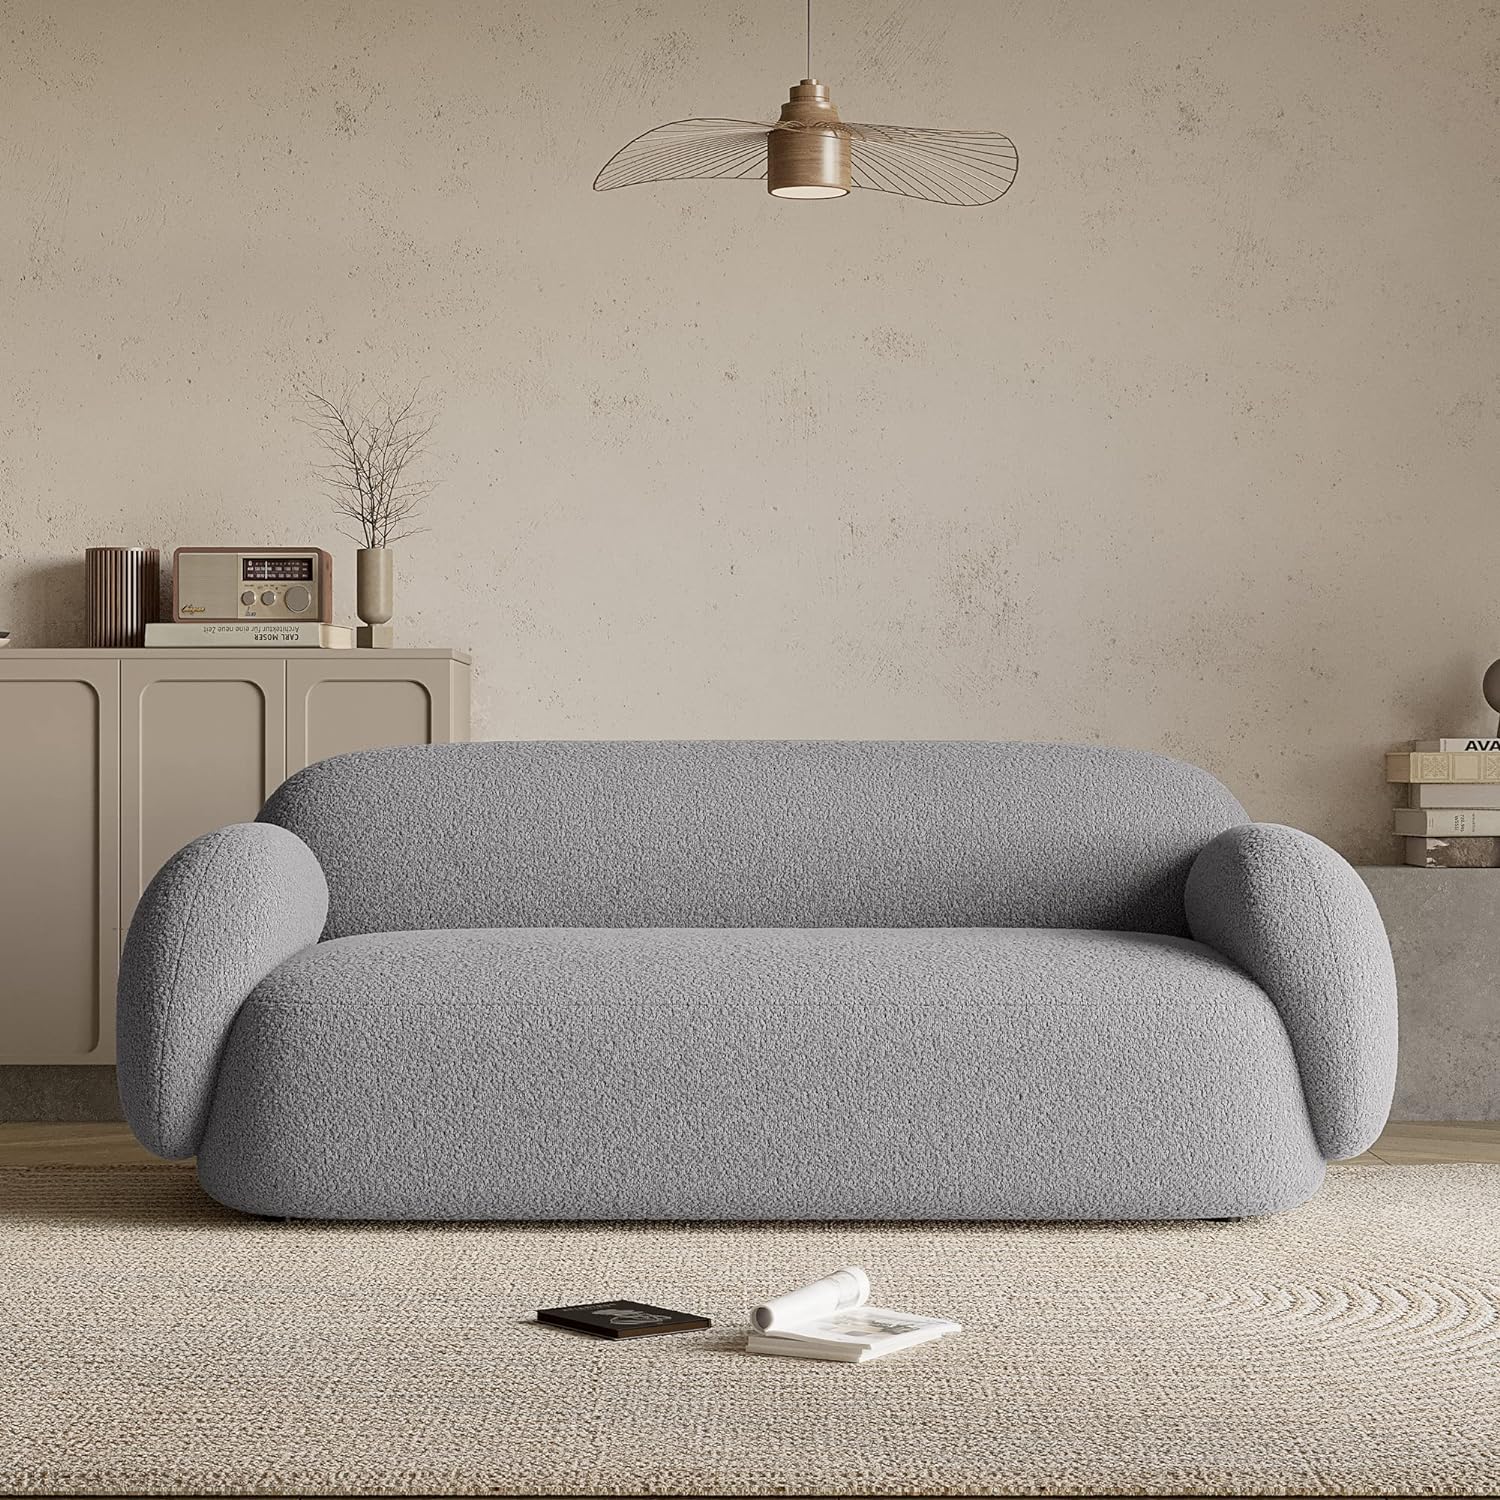 Minimalist Sofa with Scandinavian Design